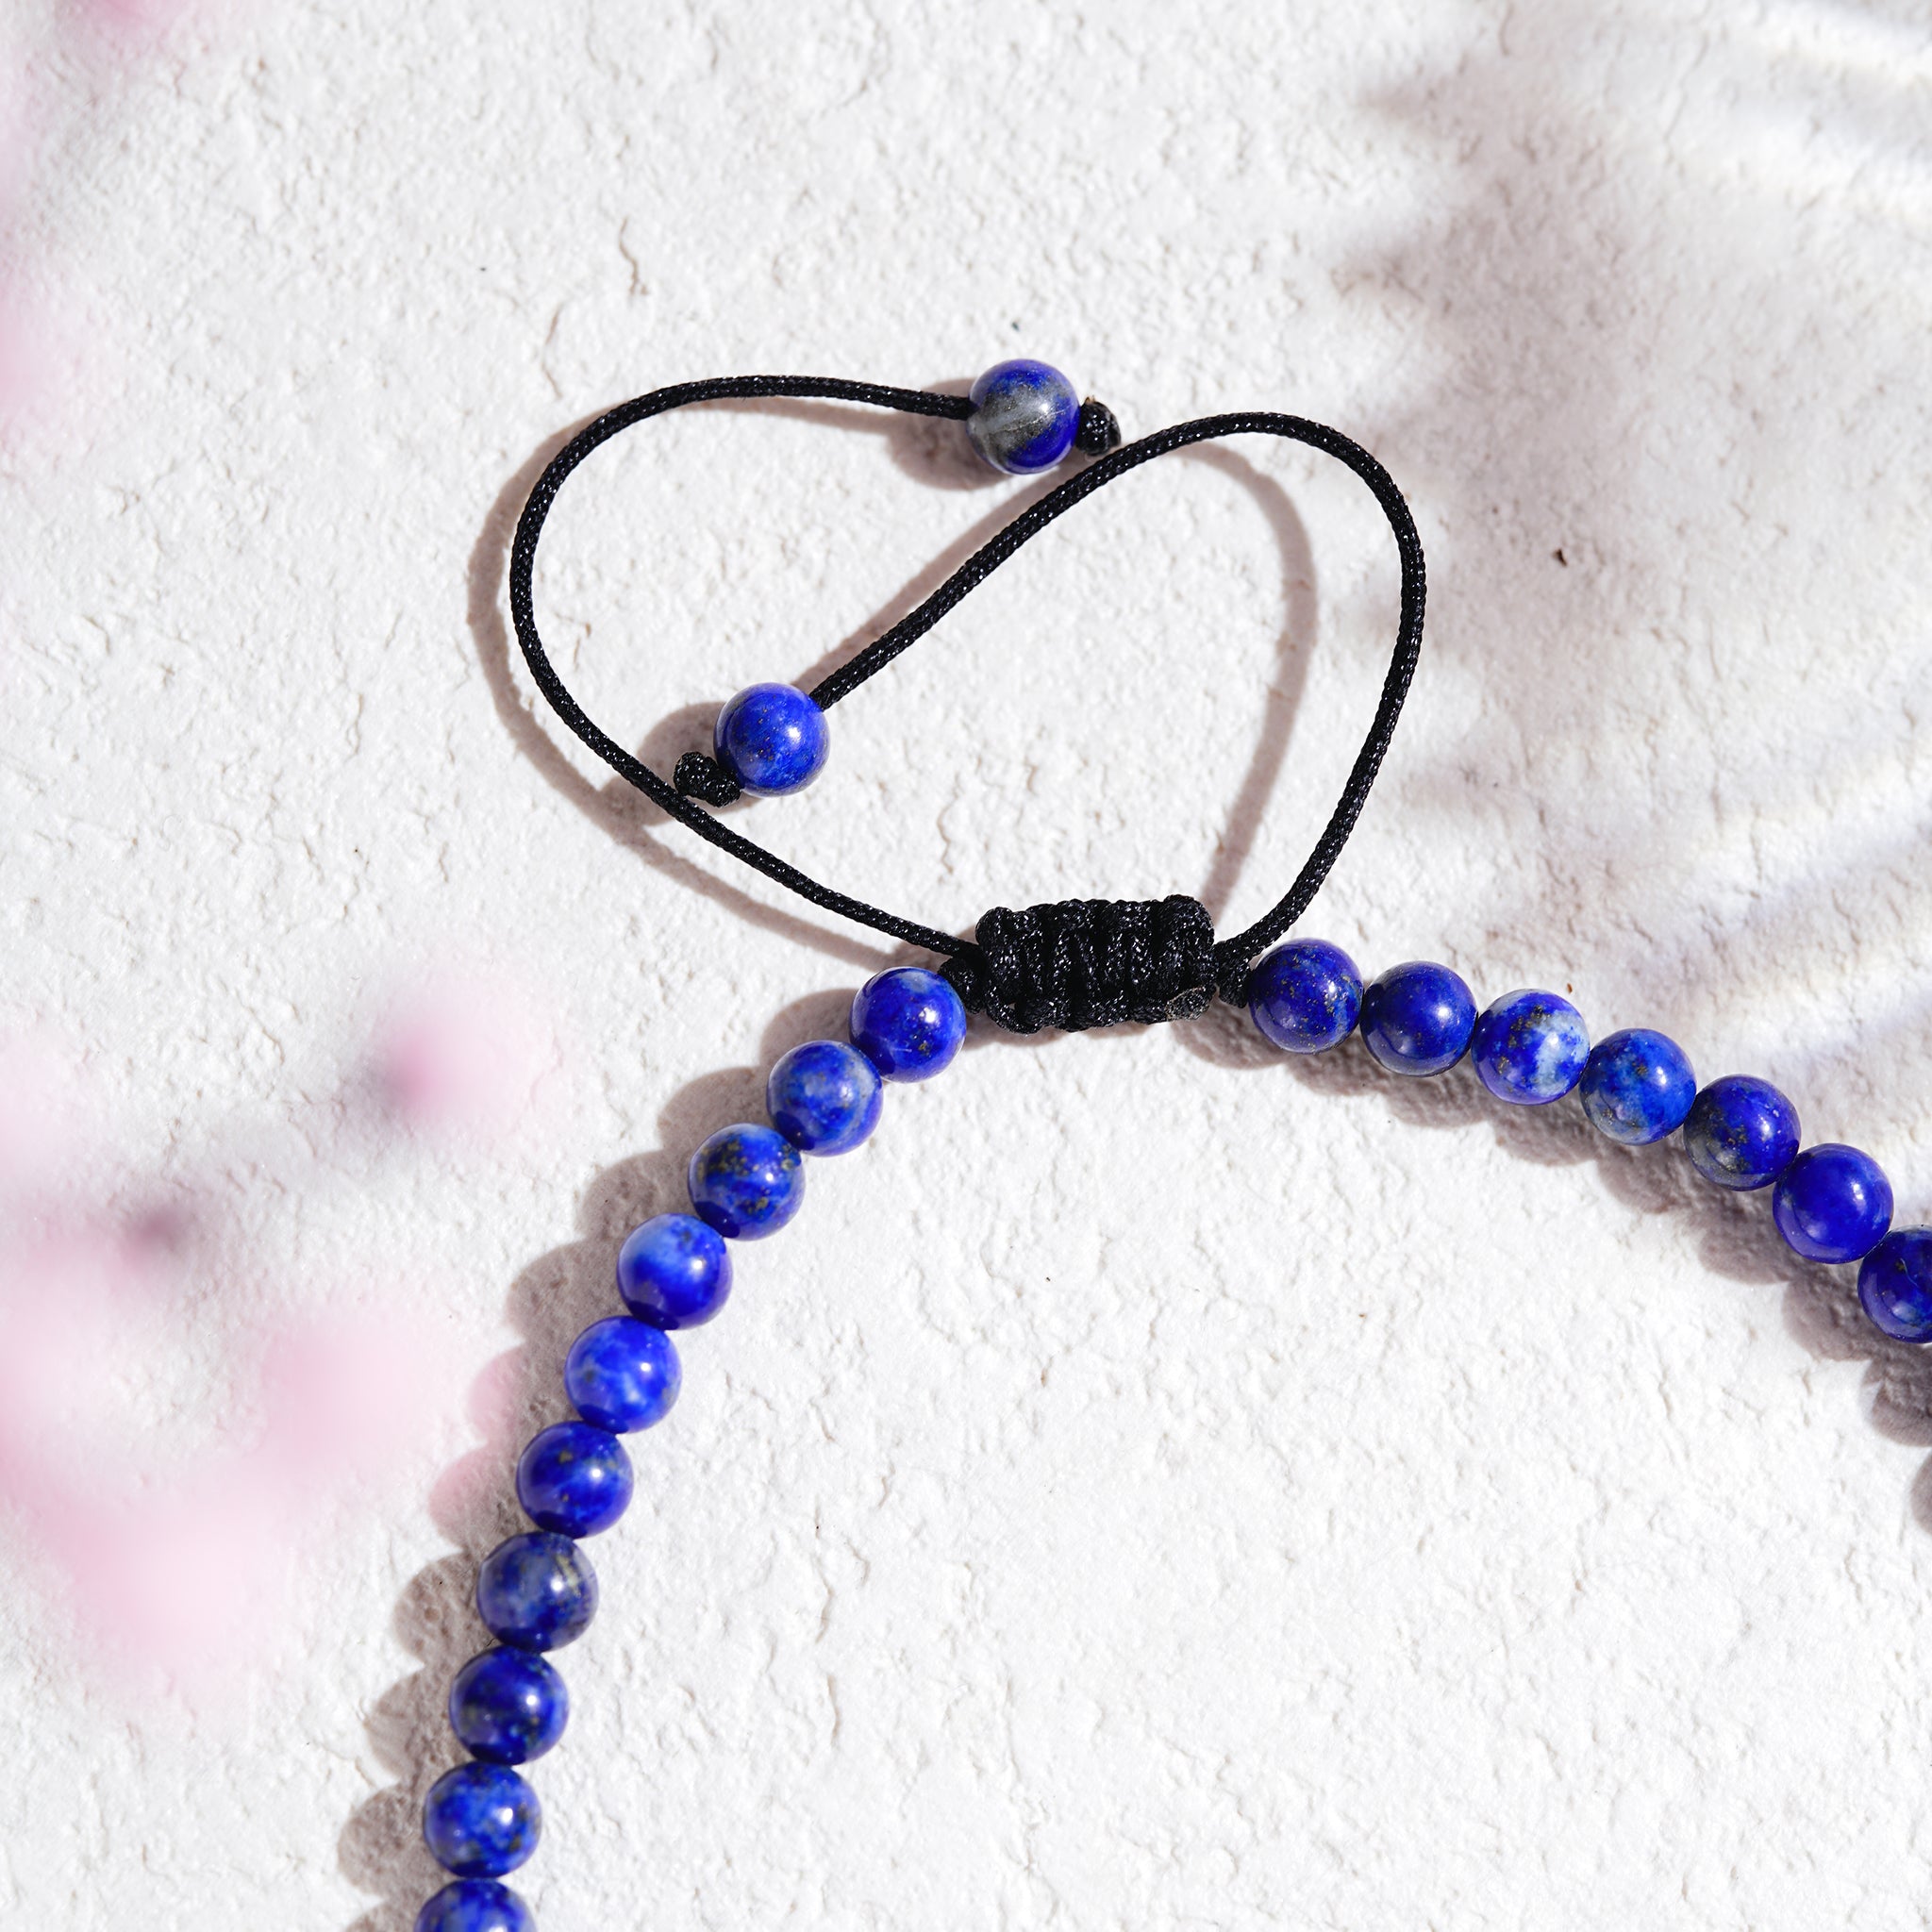 Adjustable 4mm bracelet - Lapis Lazuli